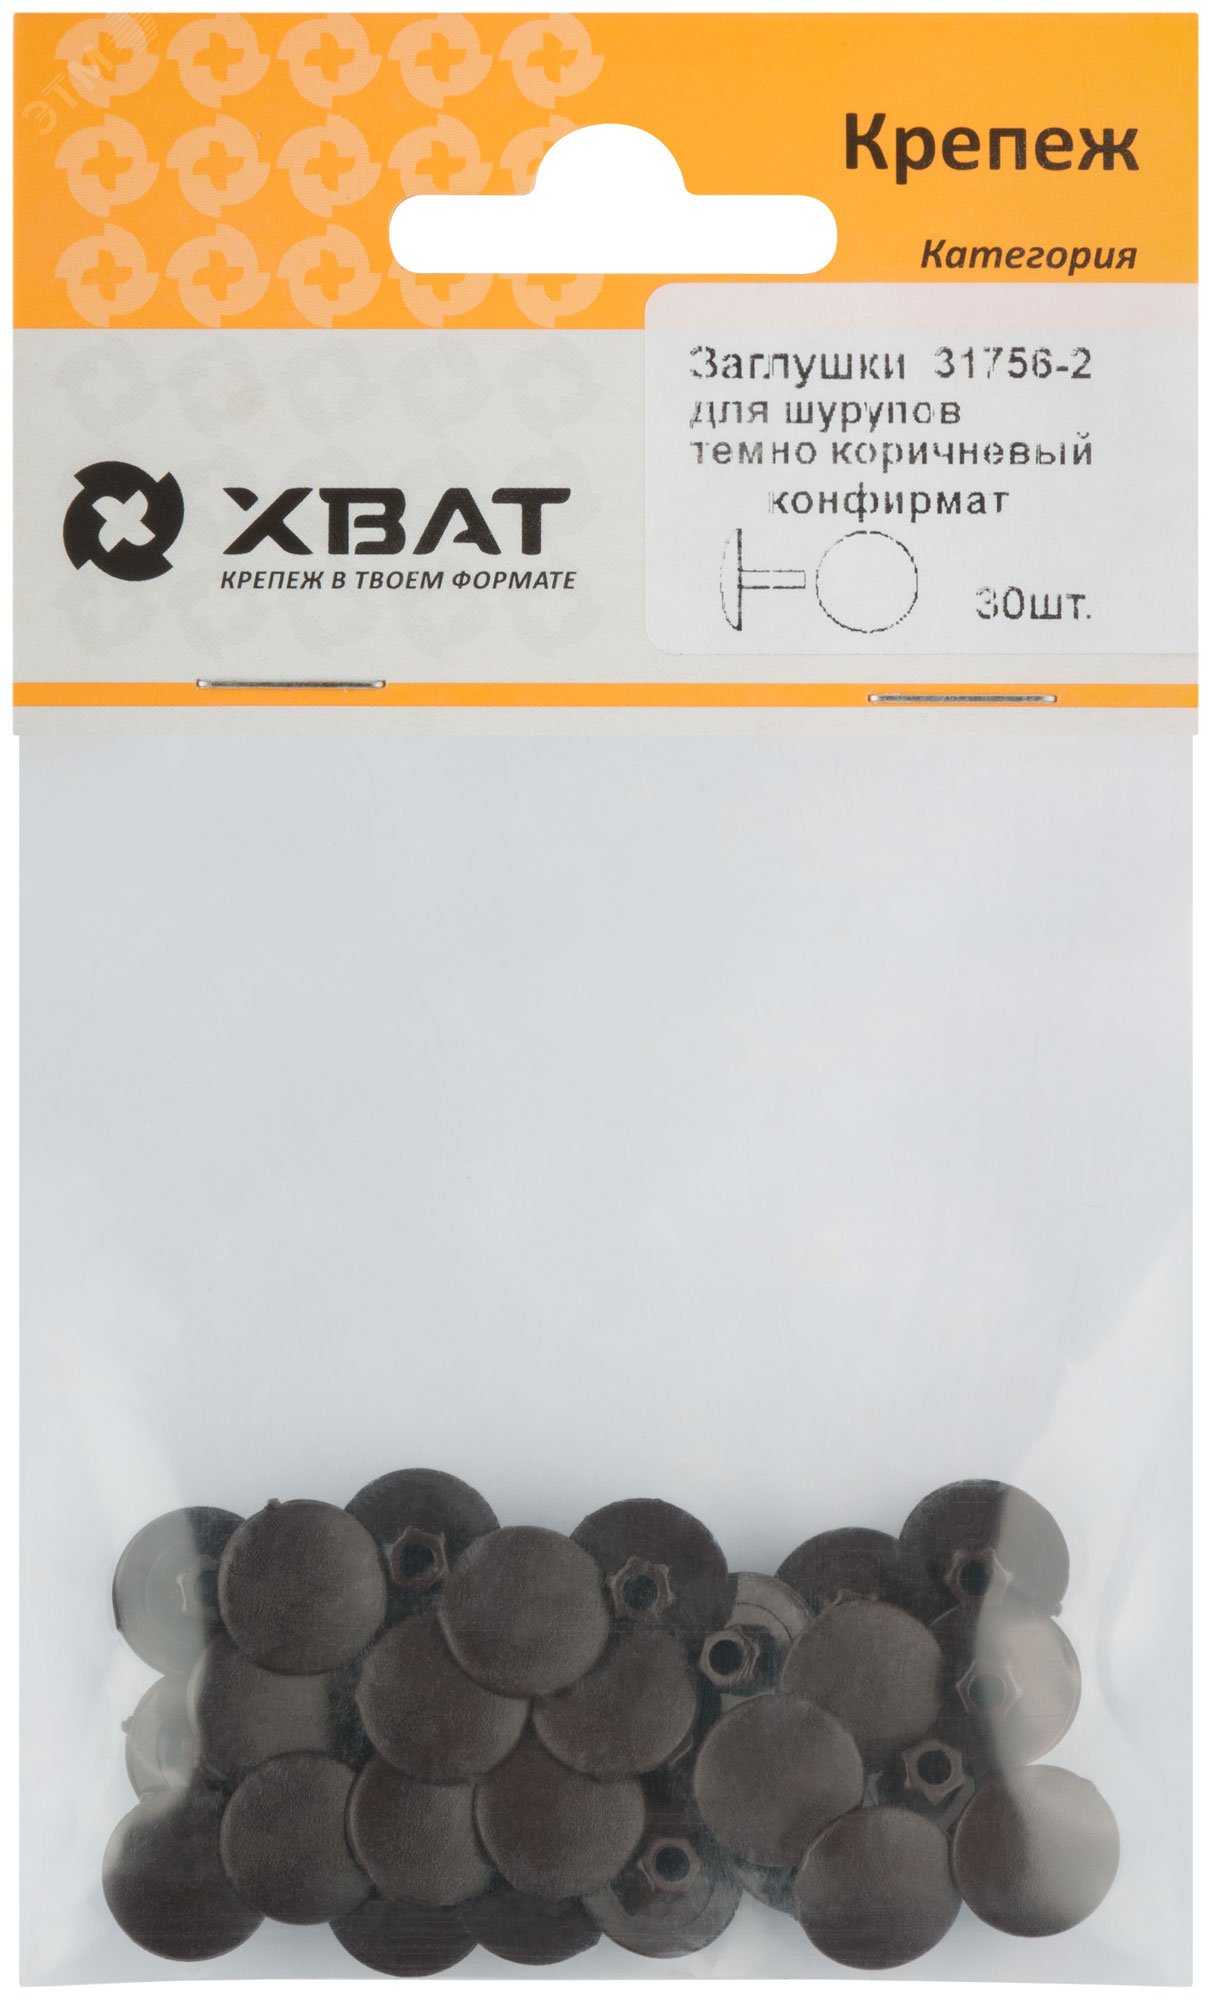 Заглушки под конфирмат темно коричневый (30шт) 31756-2 ХВАТ - превью 2